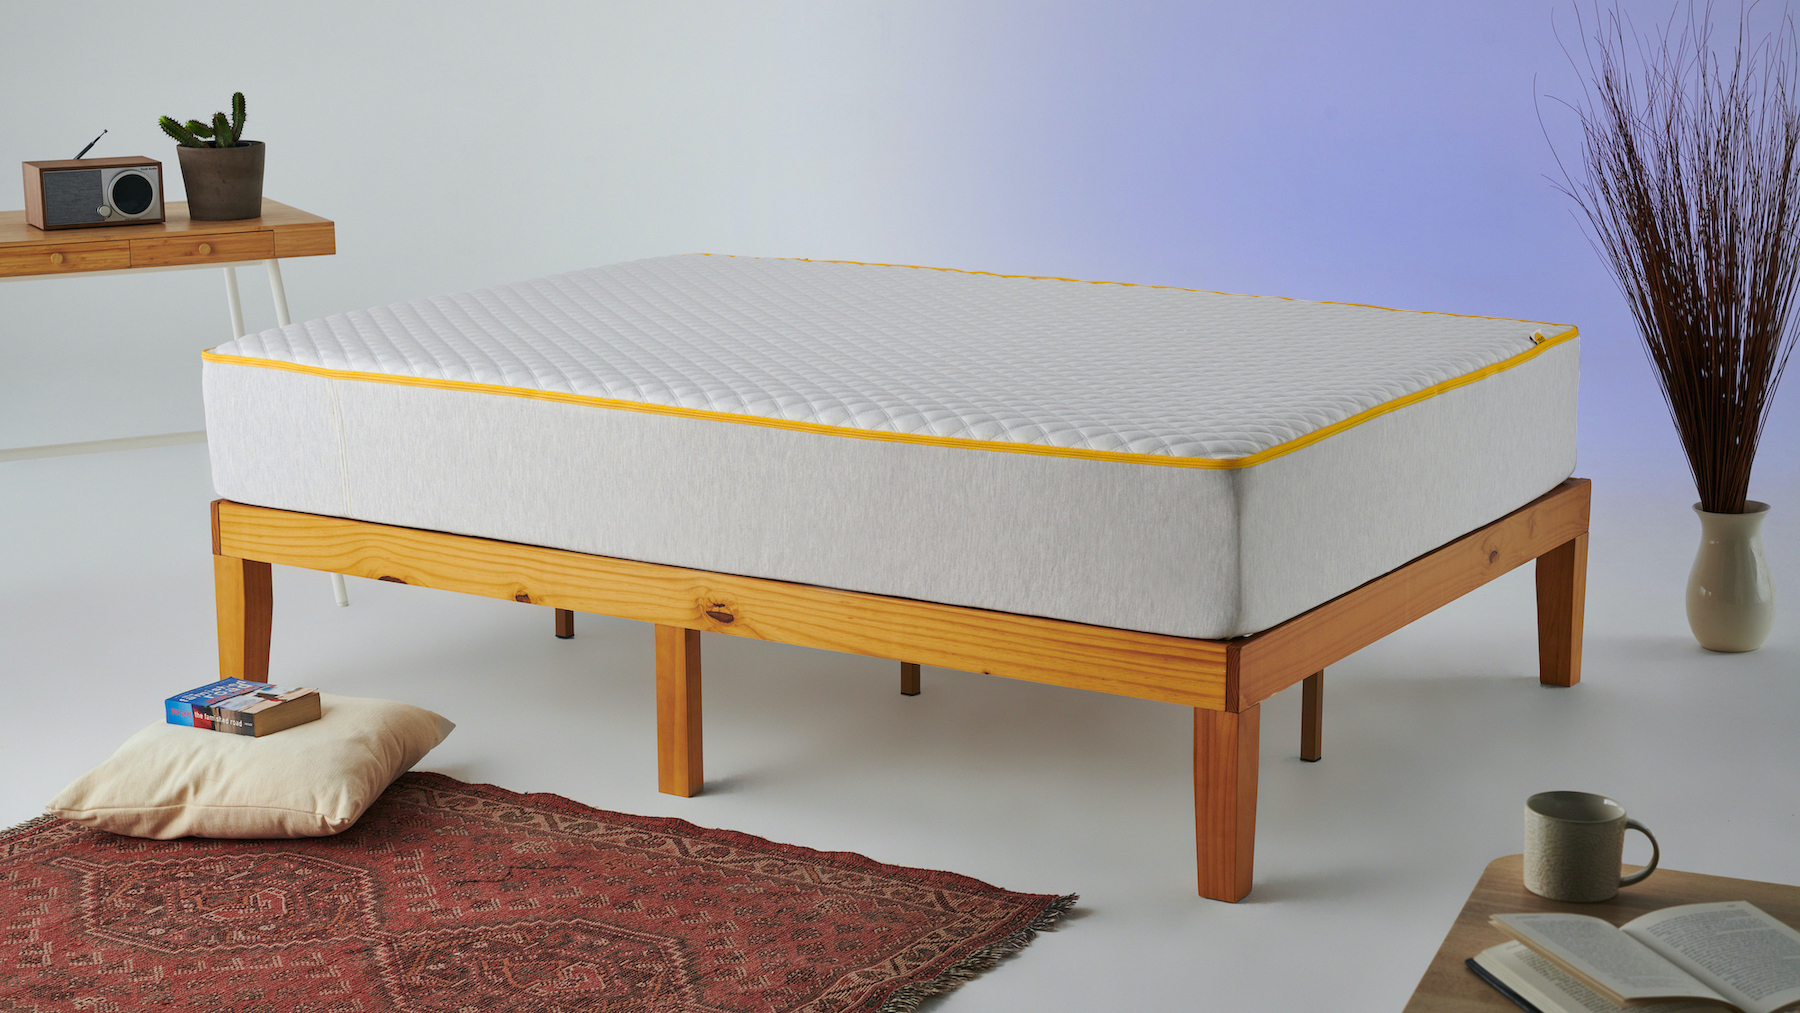 eve premium hybrid mattress review